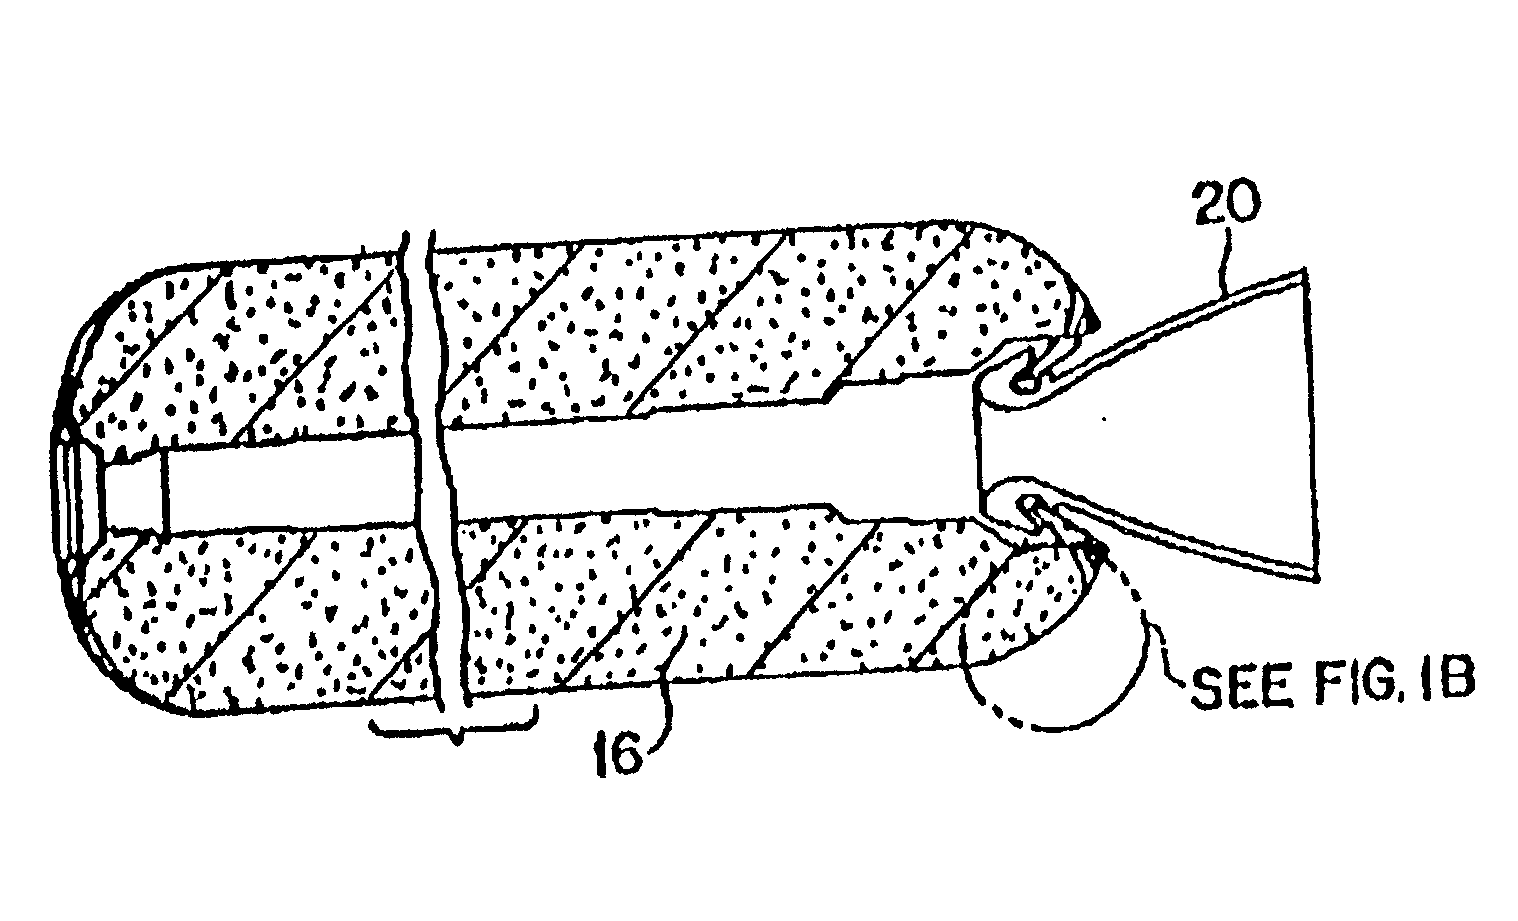 Fiber-reinforced rocket motor insulation